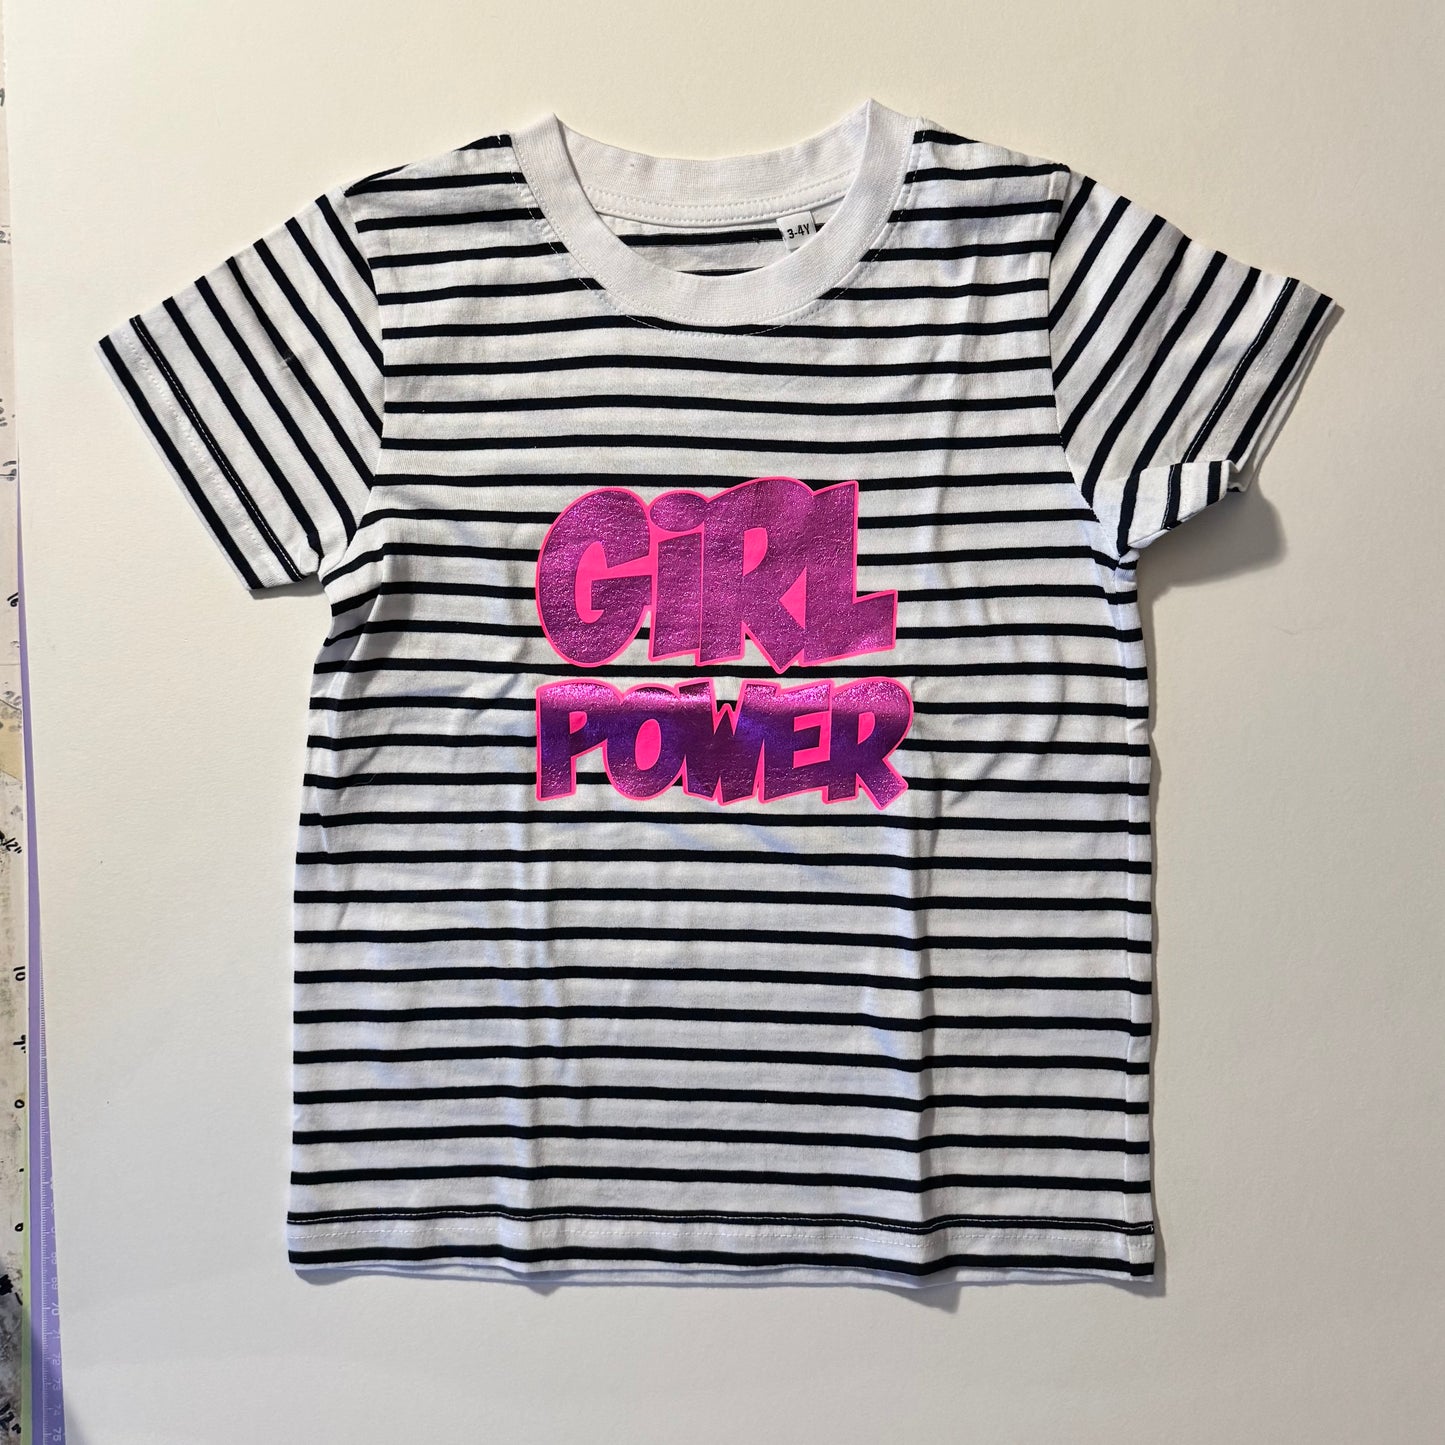 SALE Kids Girl Power T-Shirt - 3-4 years